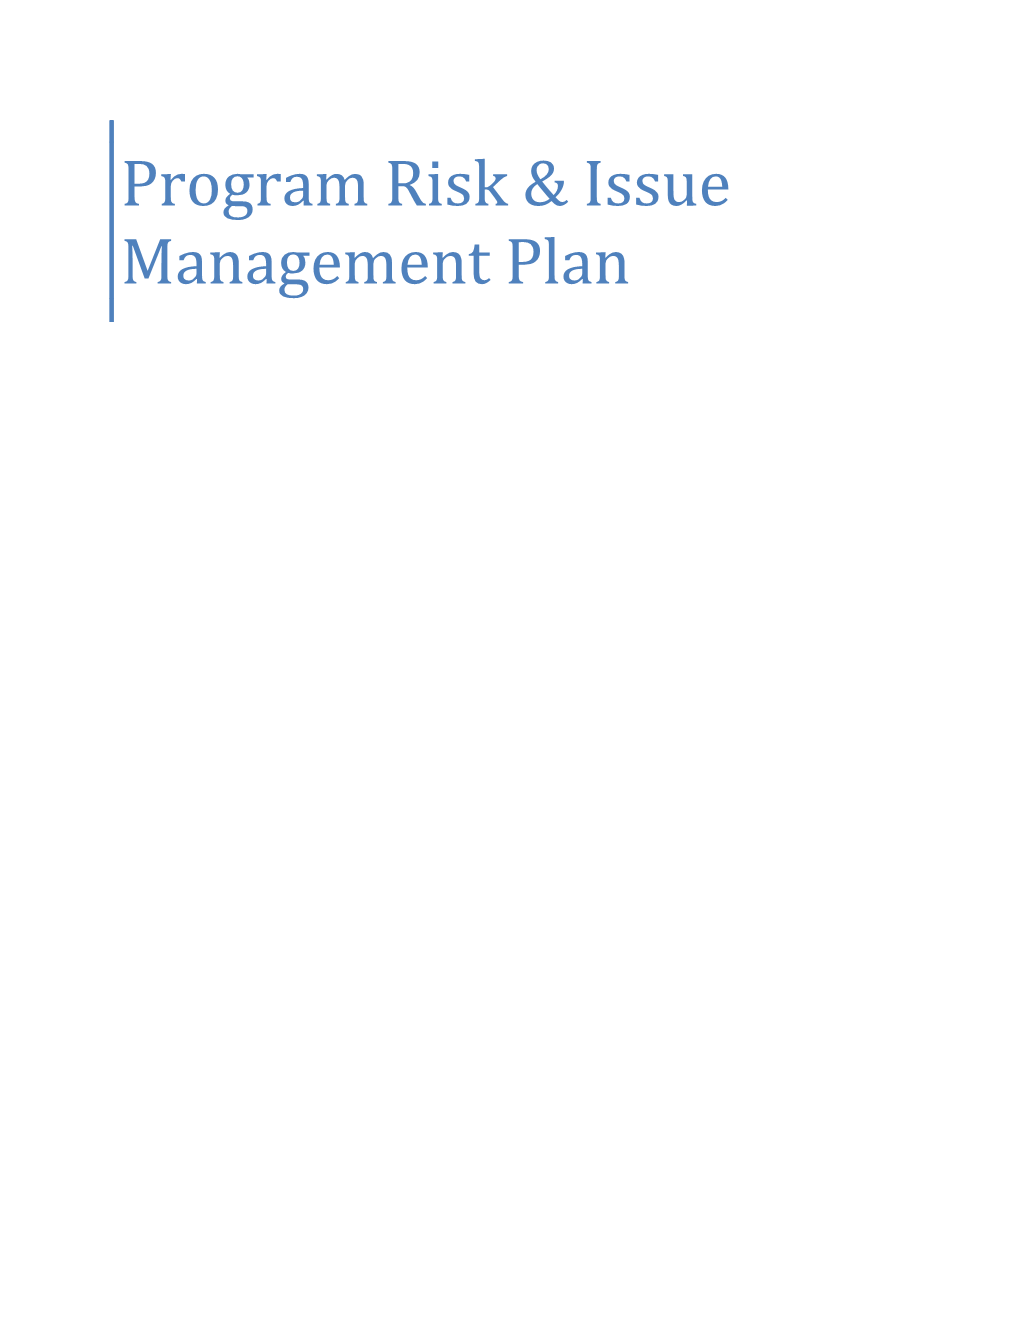 Program Risk & Issue Management Plan